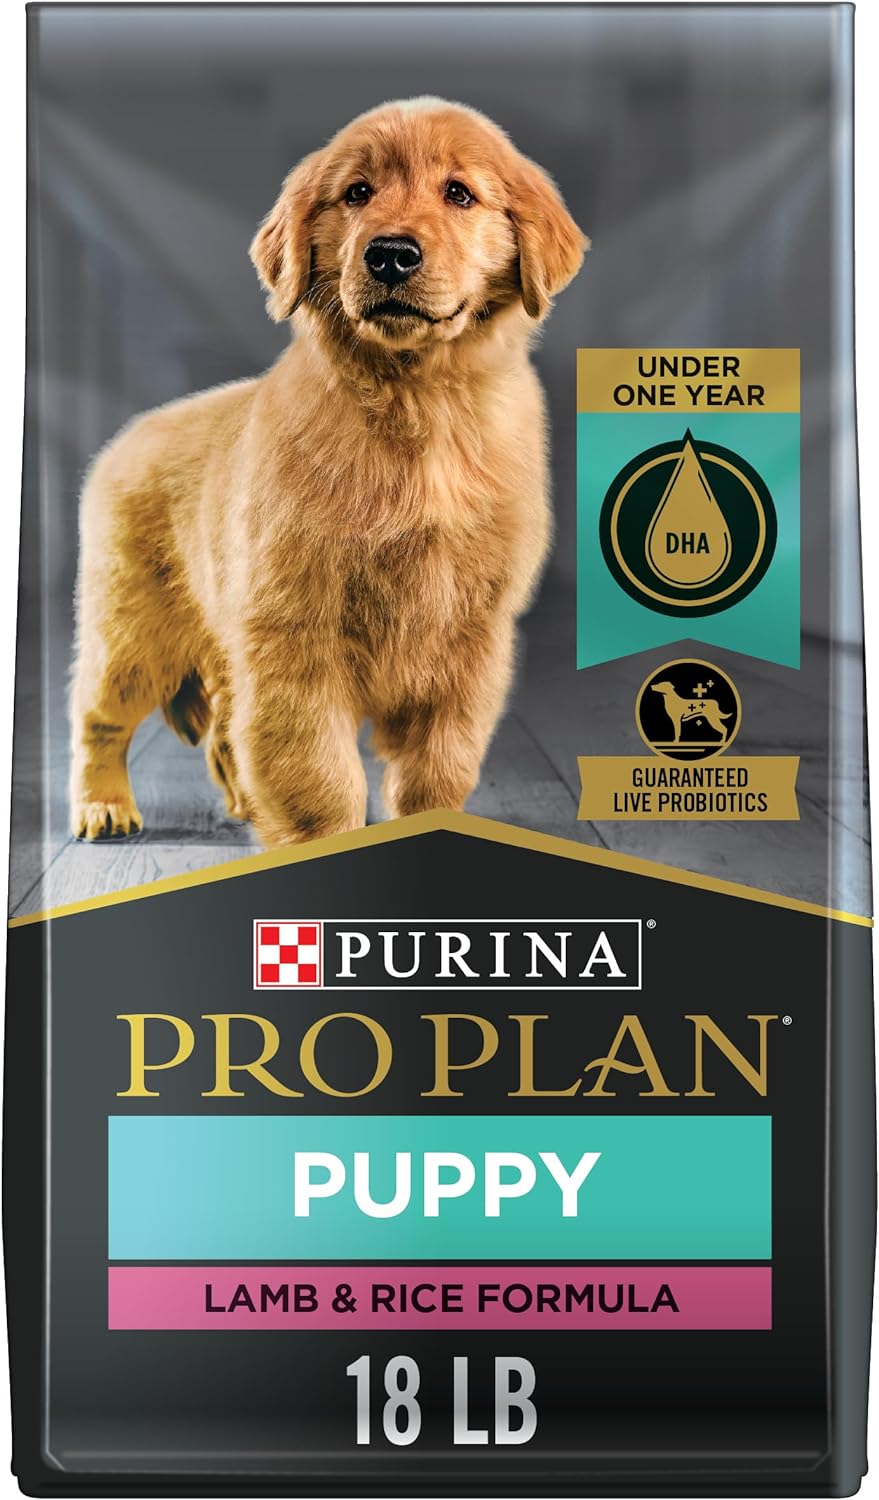 Purina Pro Plan High Protein Puppy Food DHA Lamb & Rice Formula - 18 lb. Bag